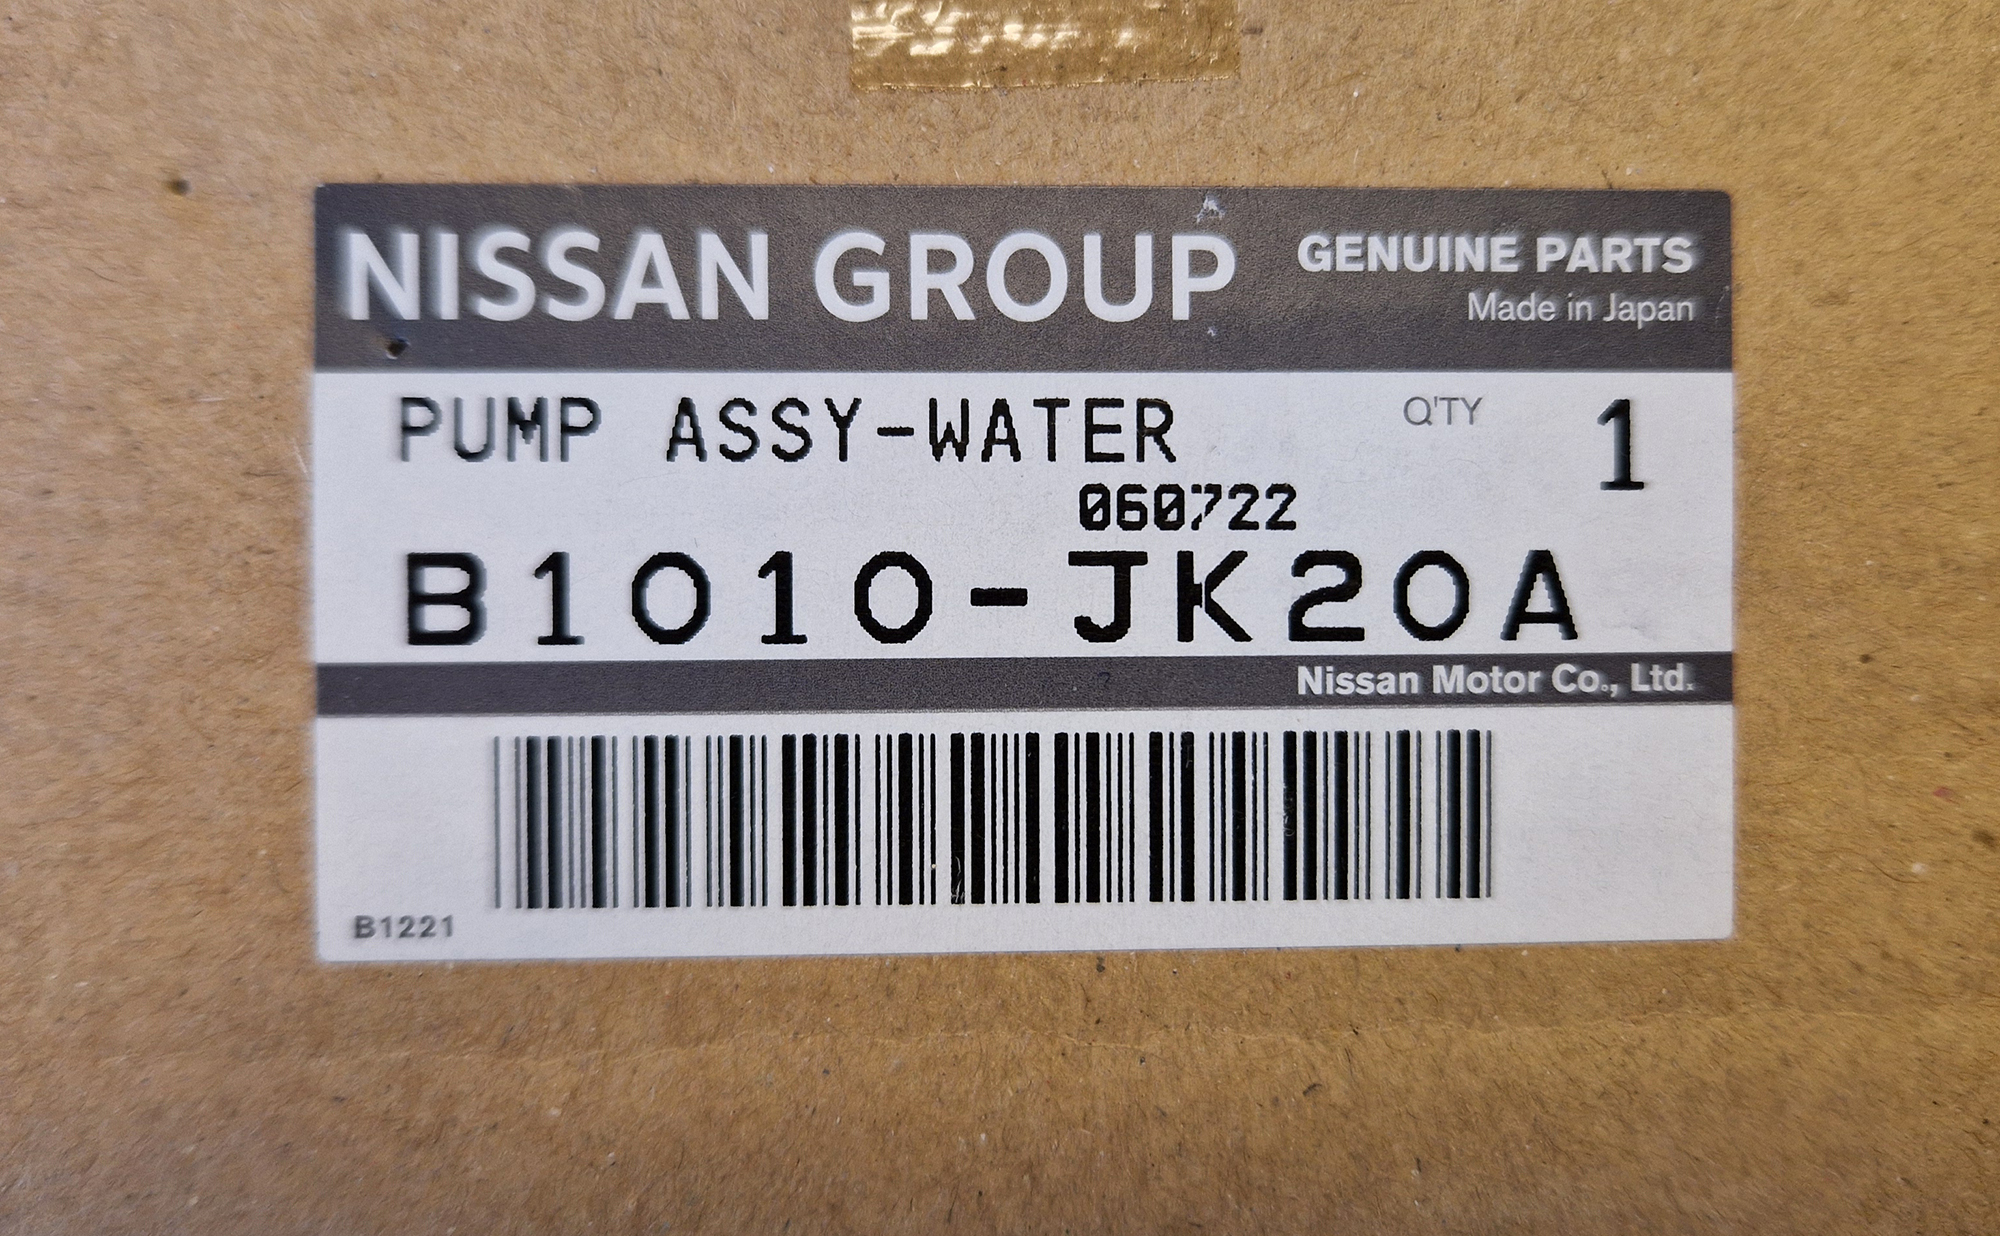 Nissan OEM water pump for VR38DETT engines - B1010-JK20A